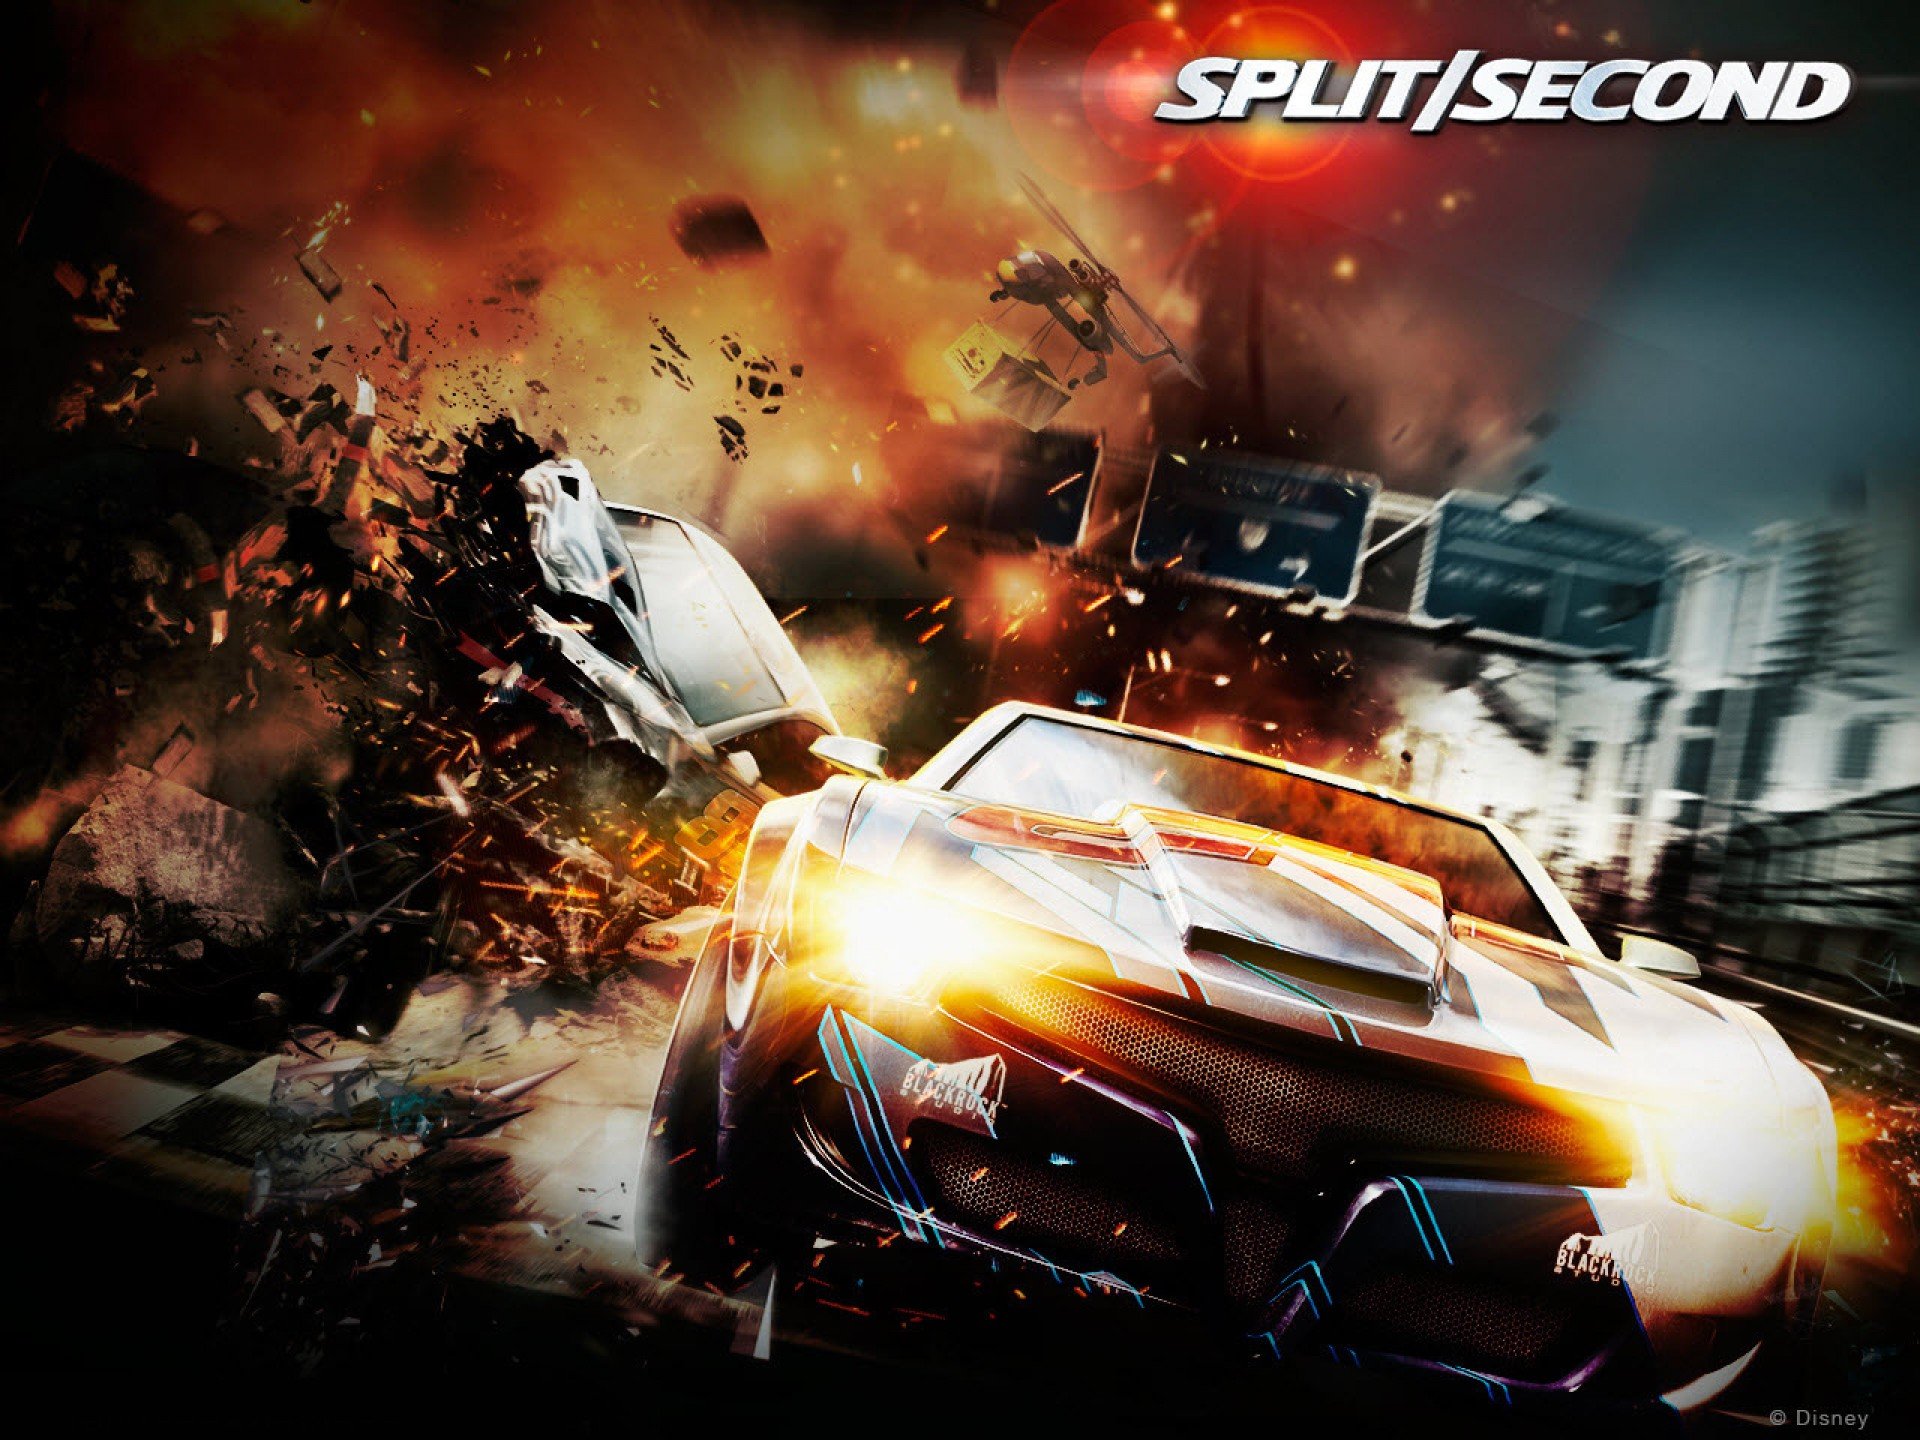 SPLIT SECOND action racing race video game arcade